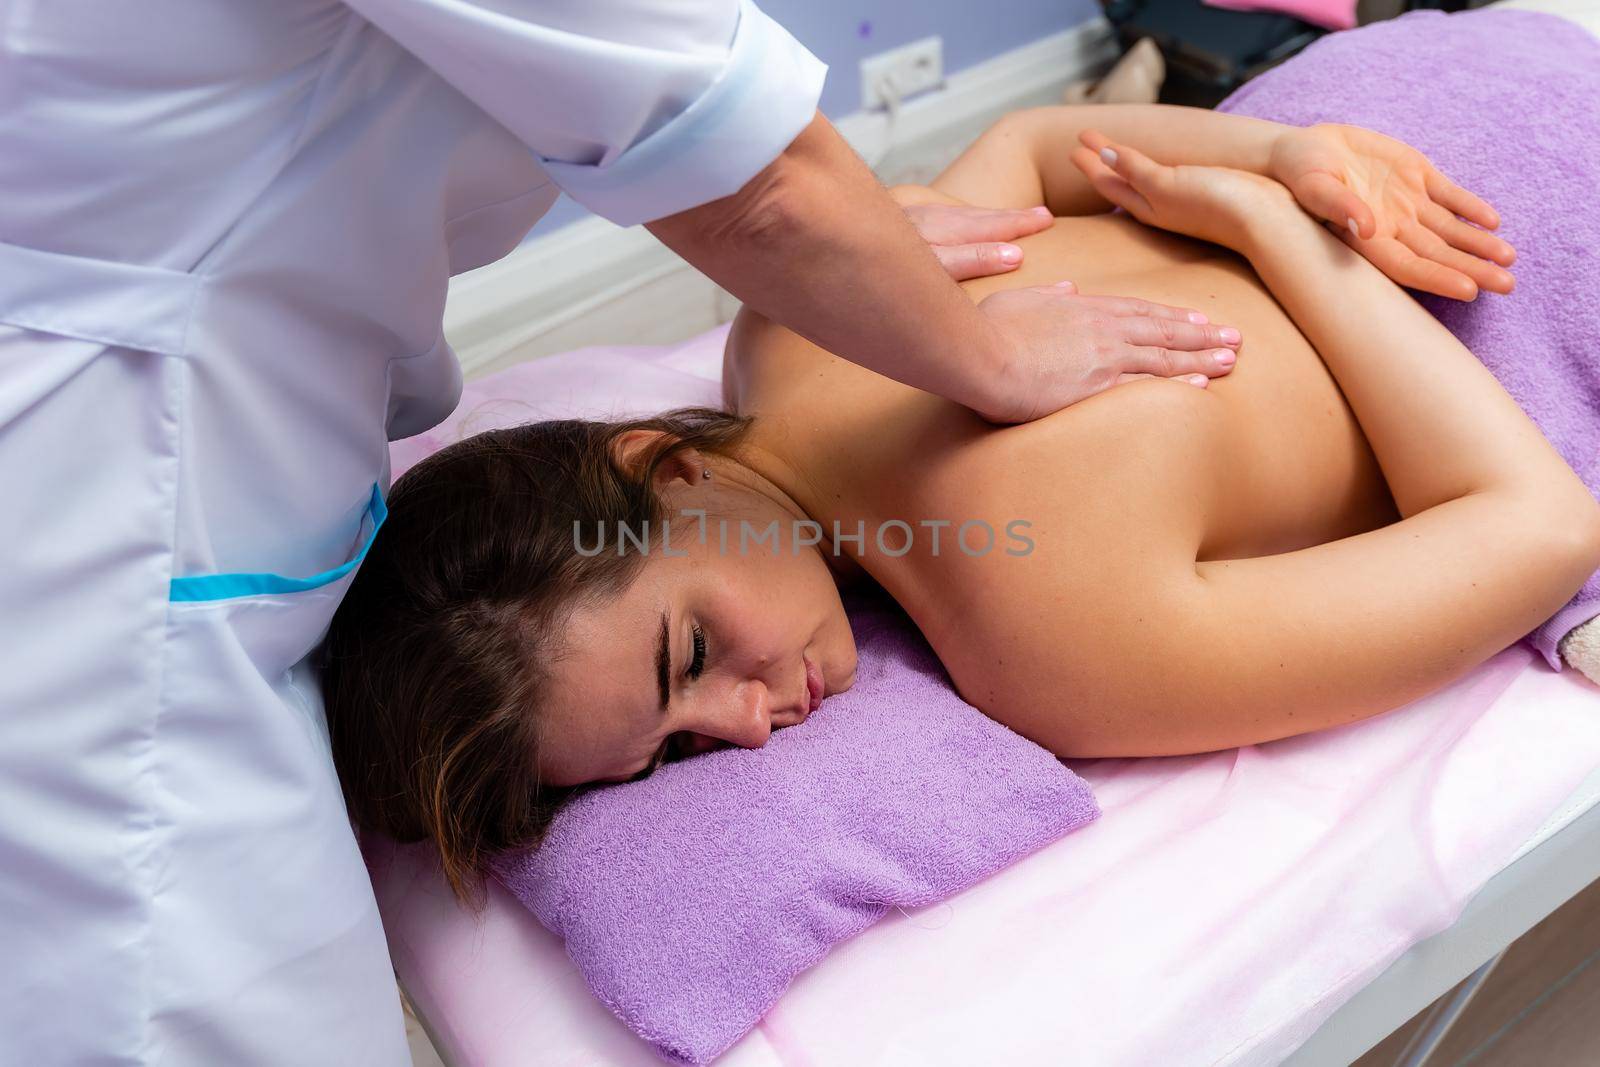 Blonde massage therapist massaging a woman. Woman getting a massage at the spa.